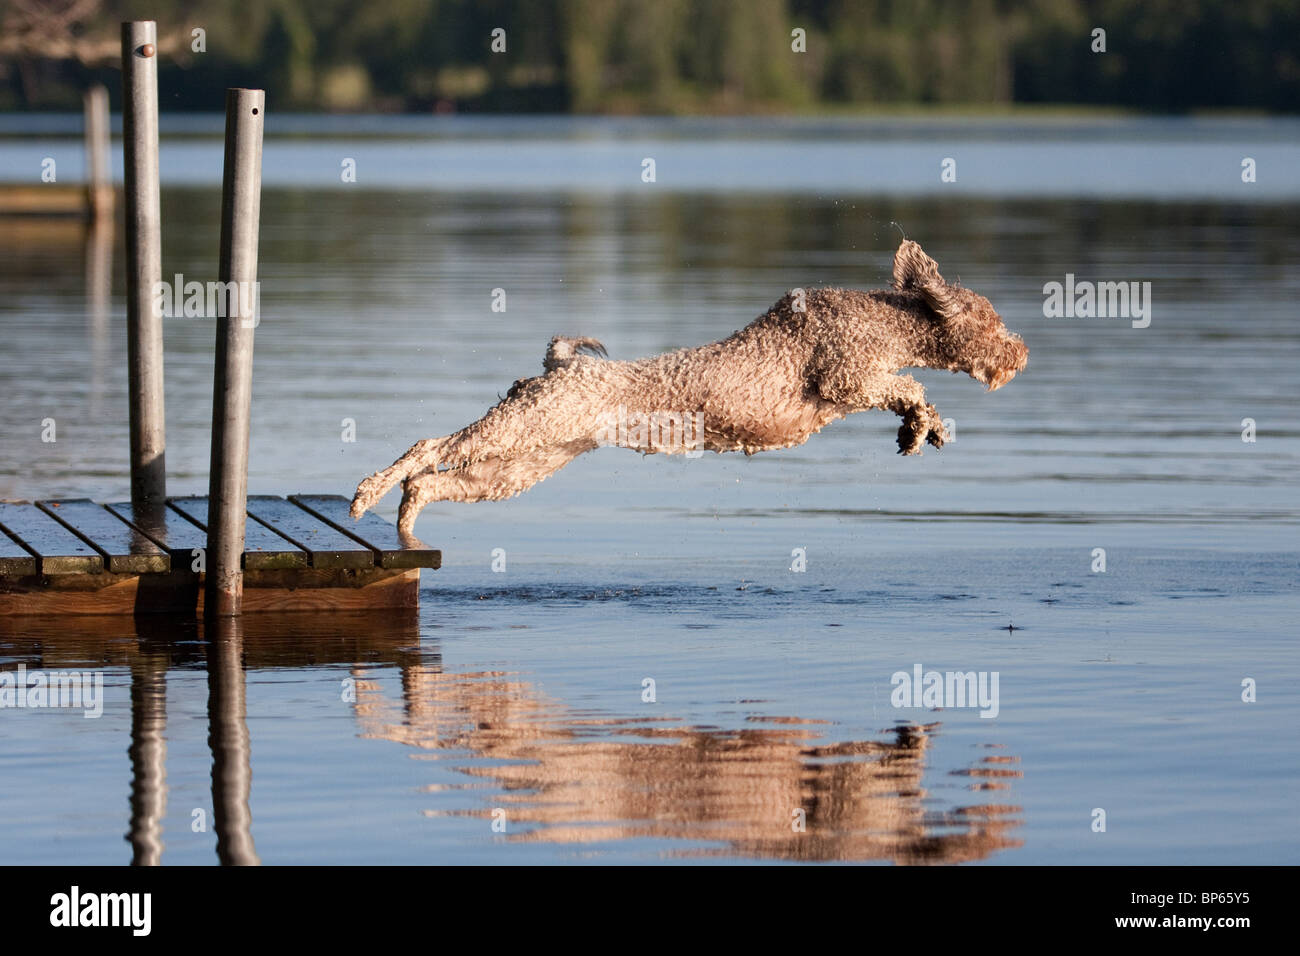 spanish waterdog jump to the lake from pier Stock Photo